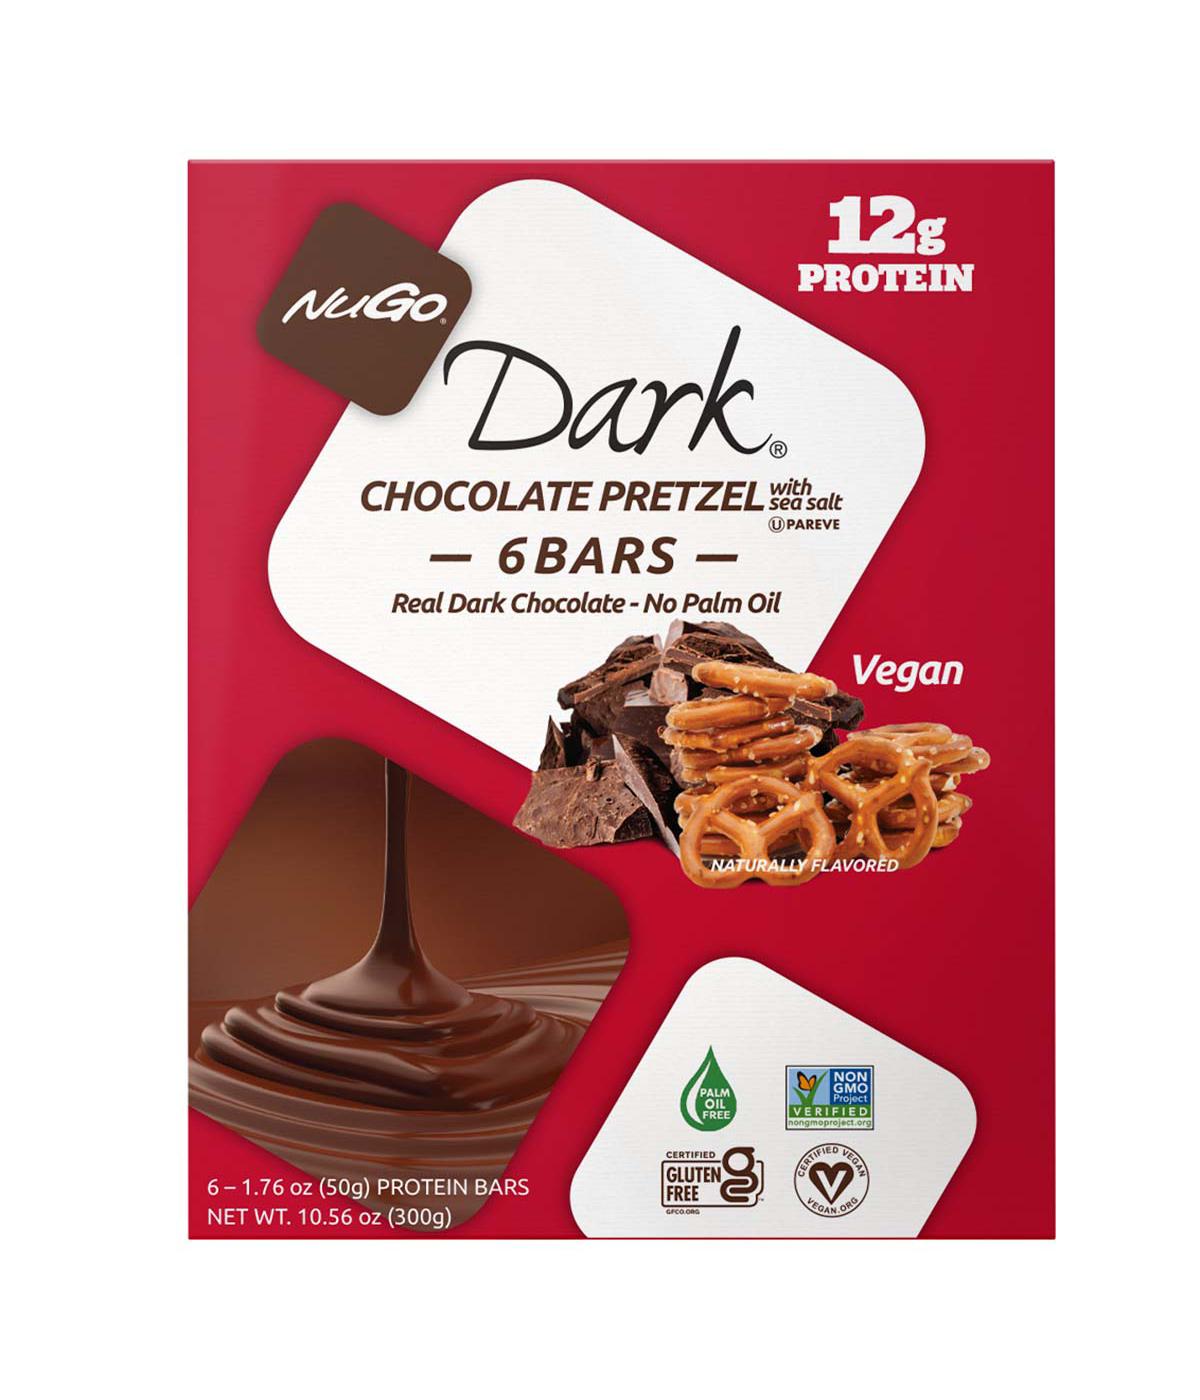 NuGo Dark 12g Protein Bars - Chocolate Pretzel; image 1 of 4